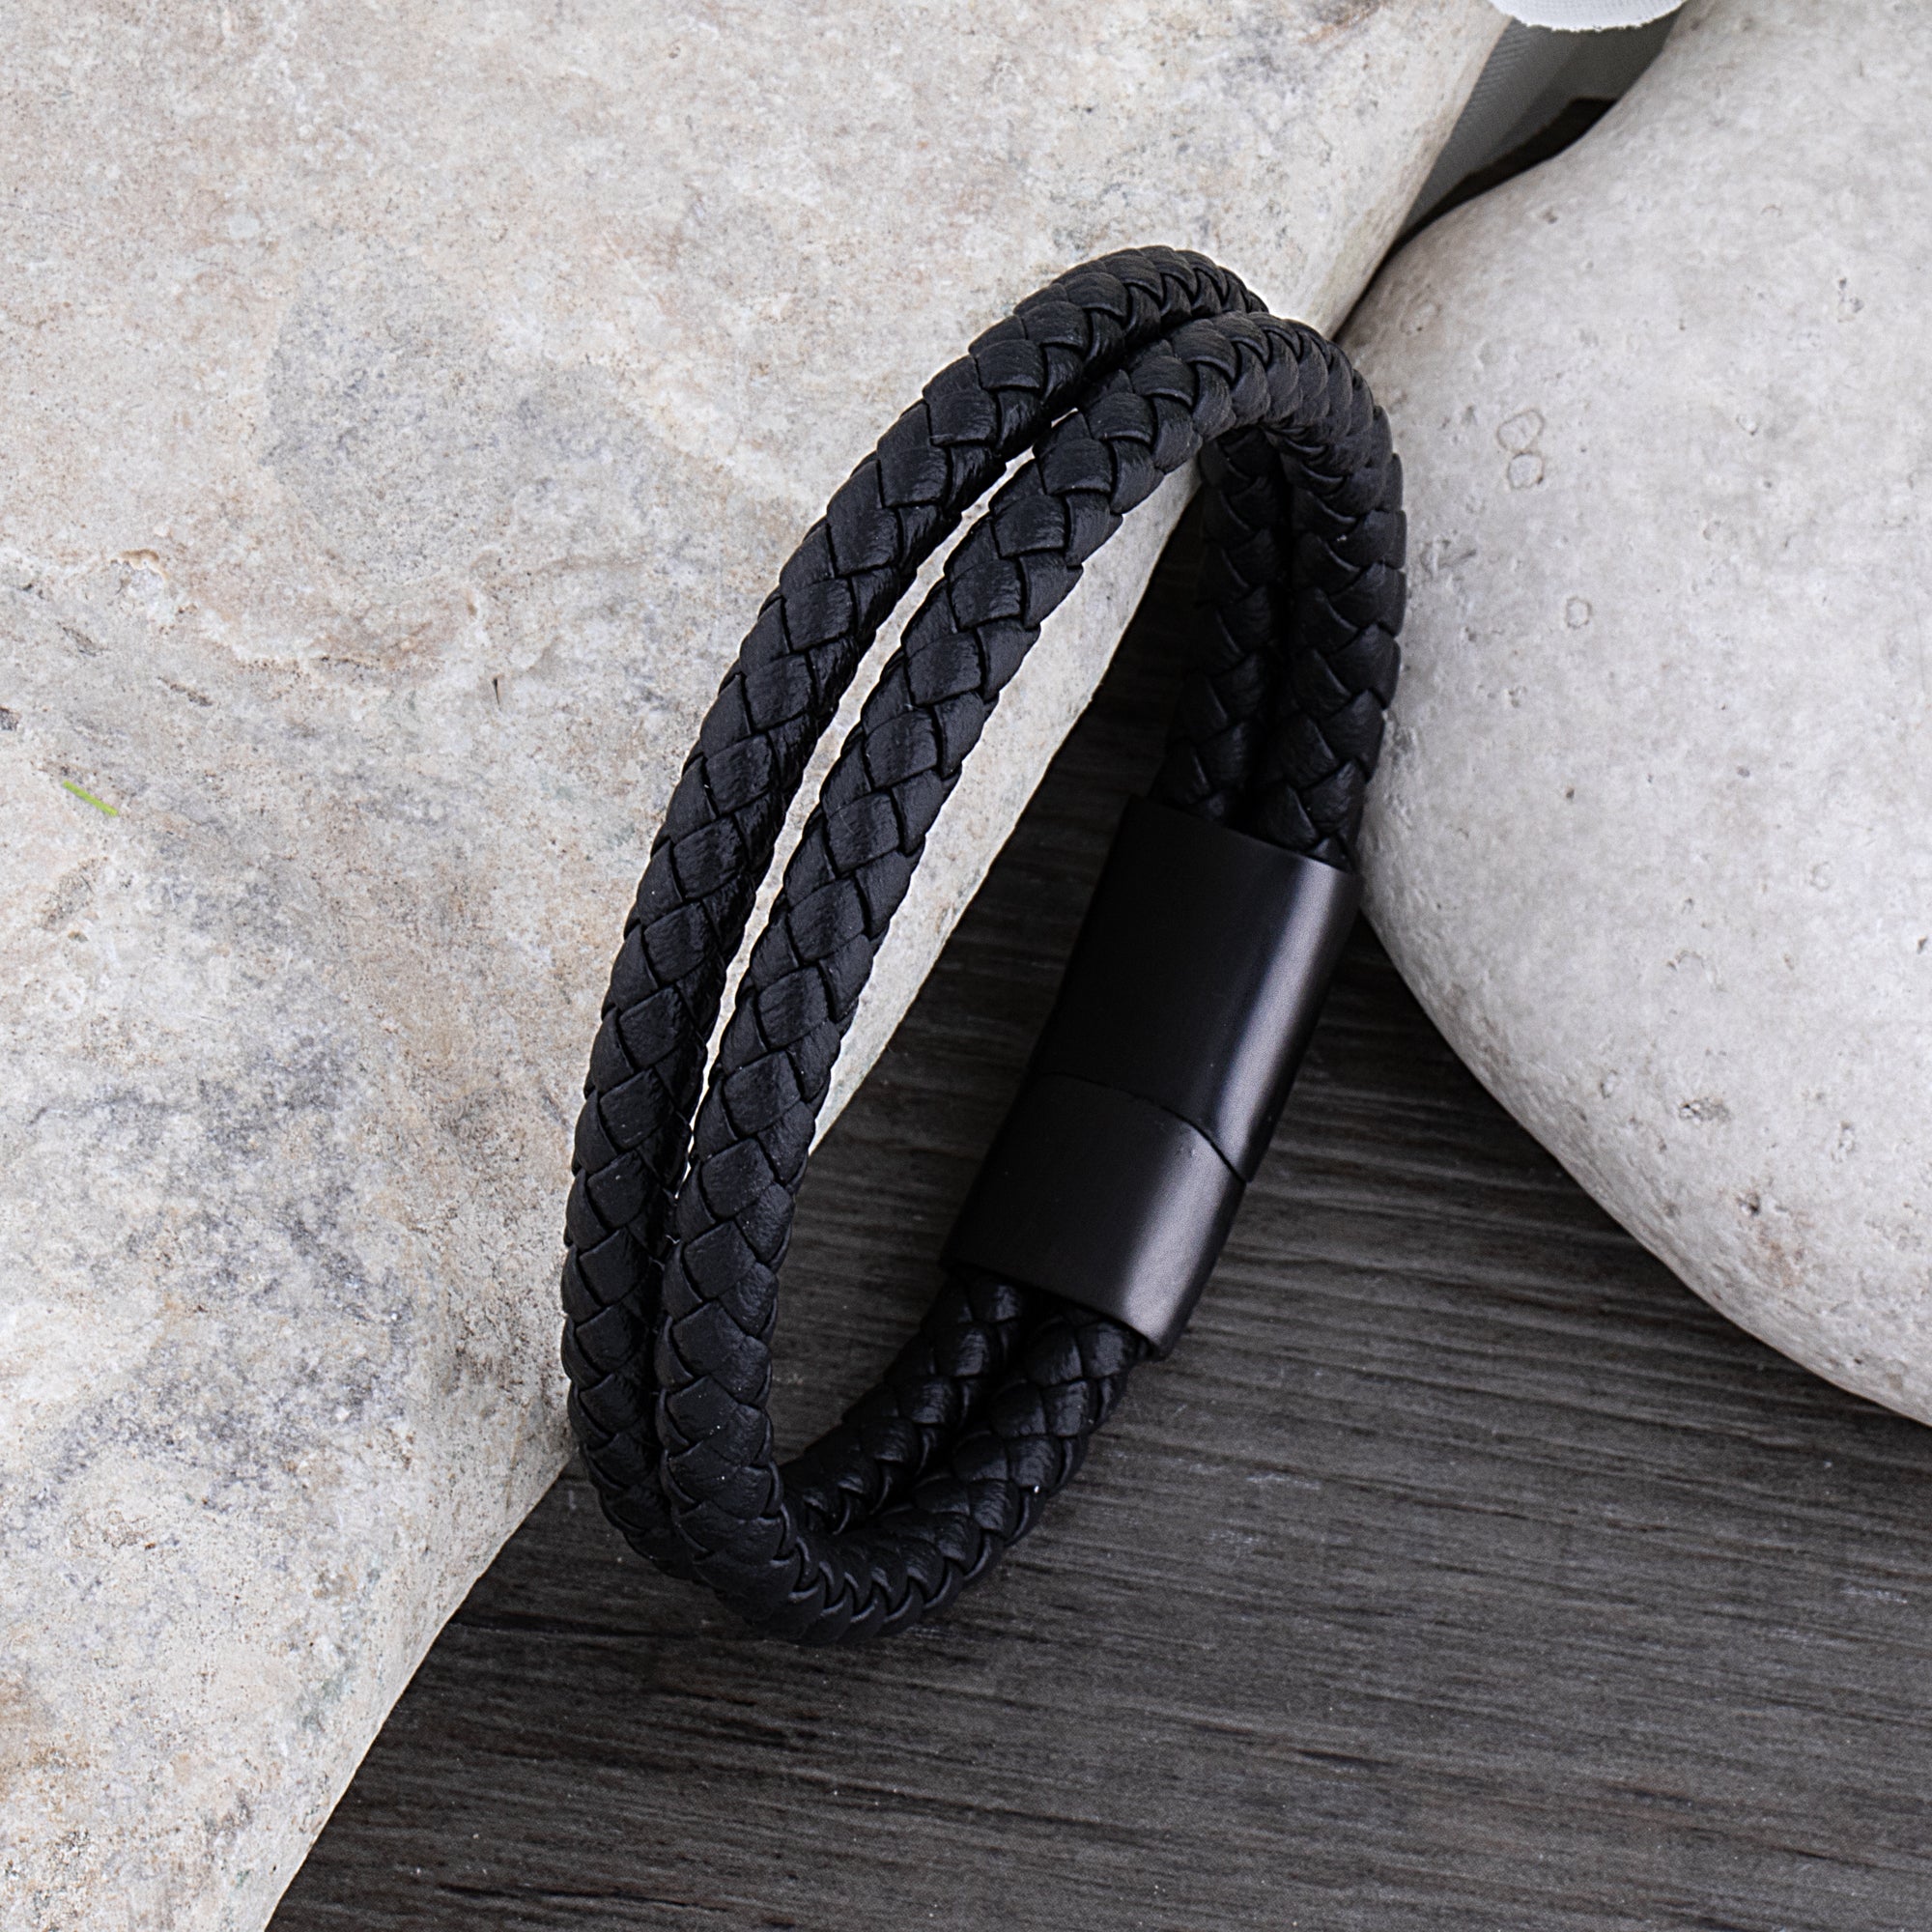 Men's Stainless Steel Black Double Row Braided Leather Bracelet - SSLB131